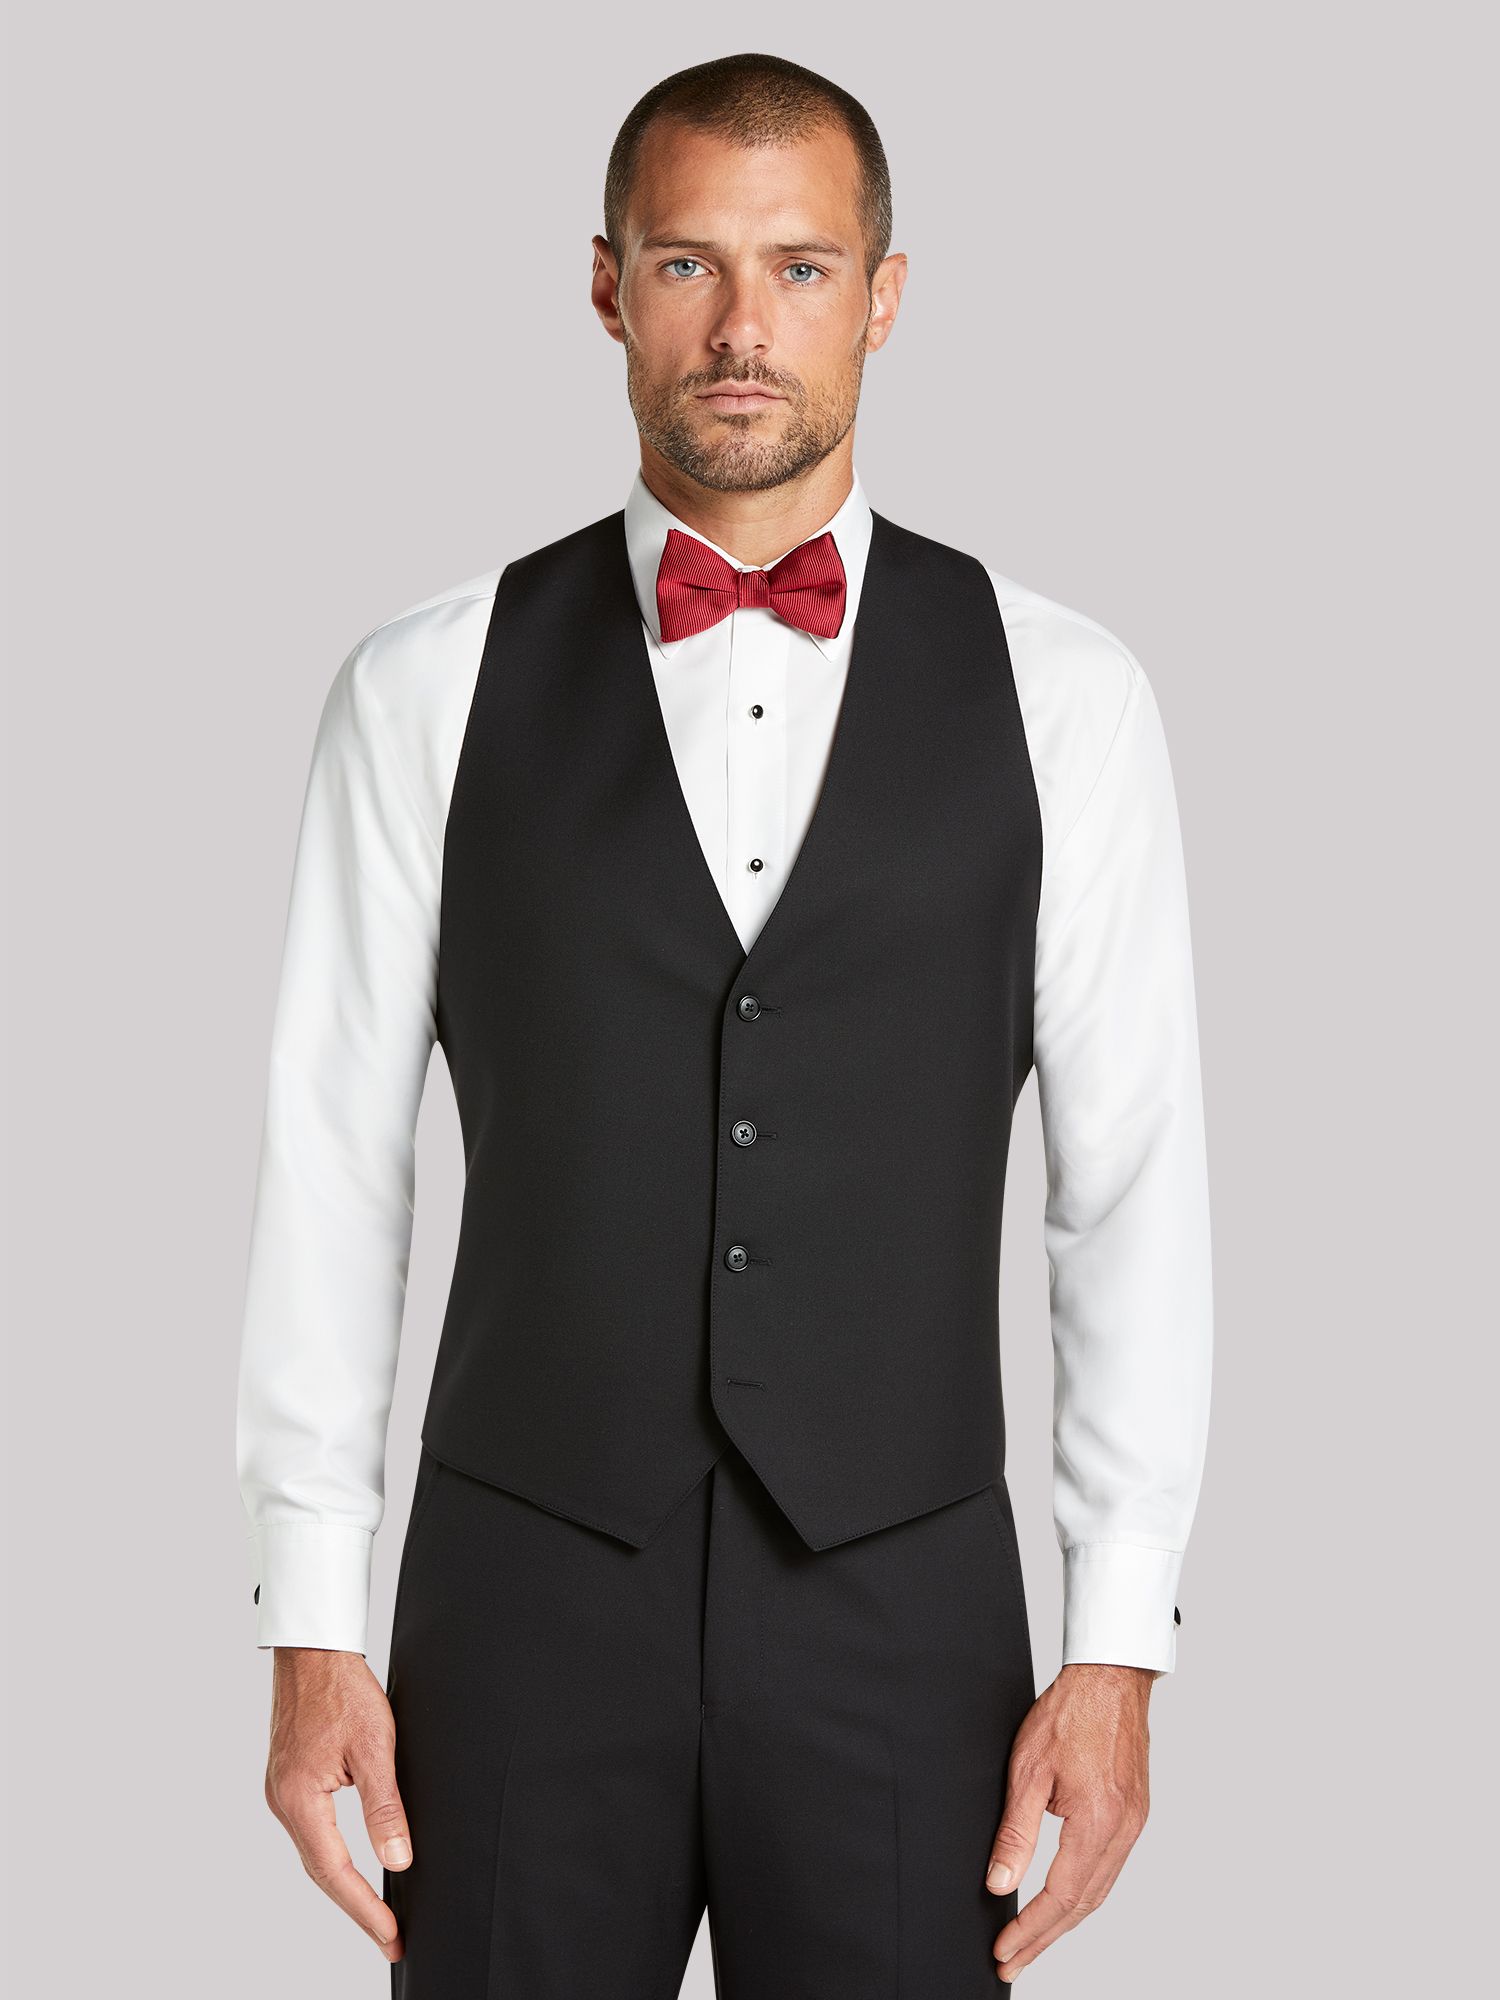 Vintage Black Two Button Suit by Pronto Uomo | Suit Rental | Moores ...